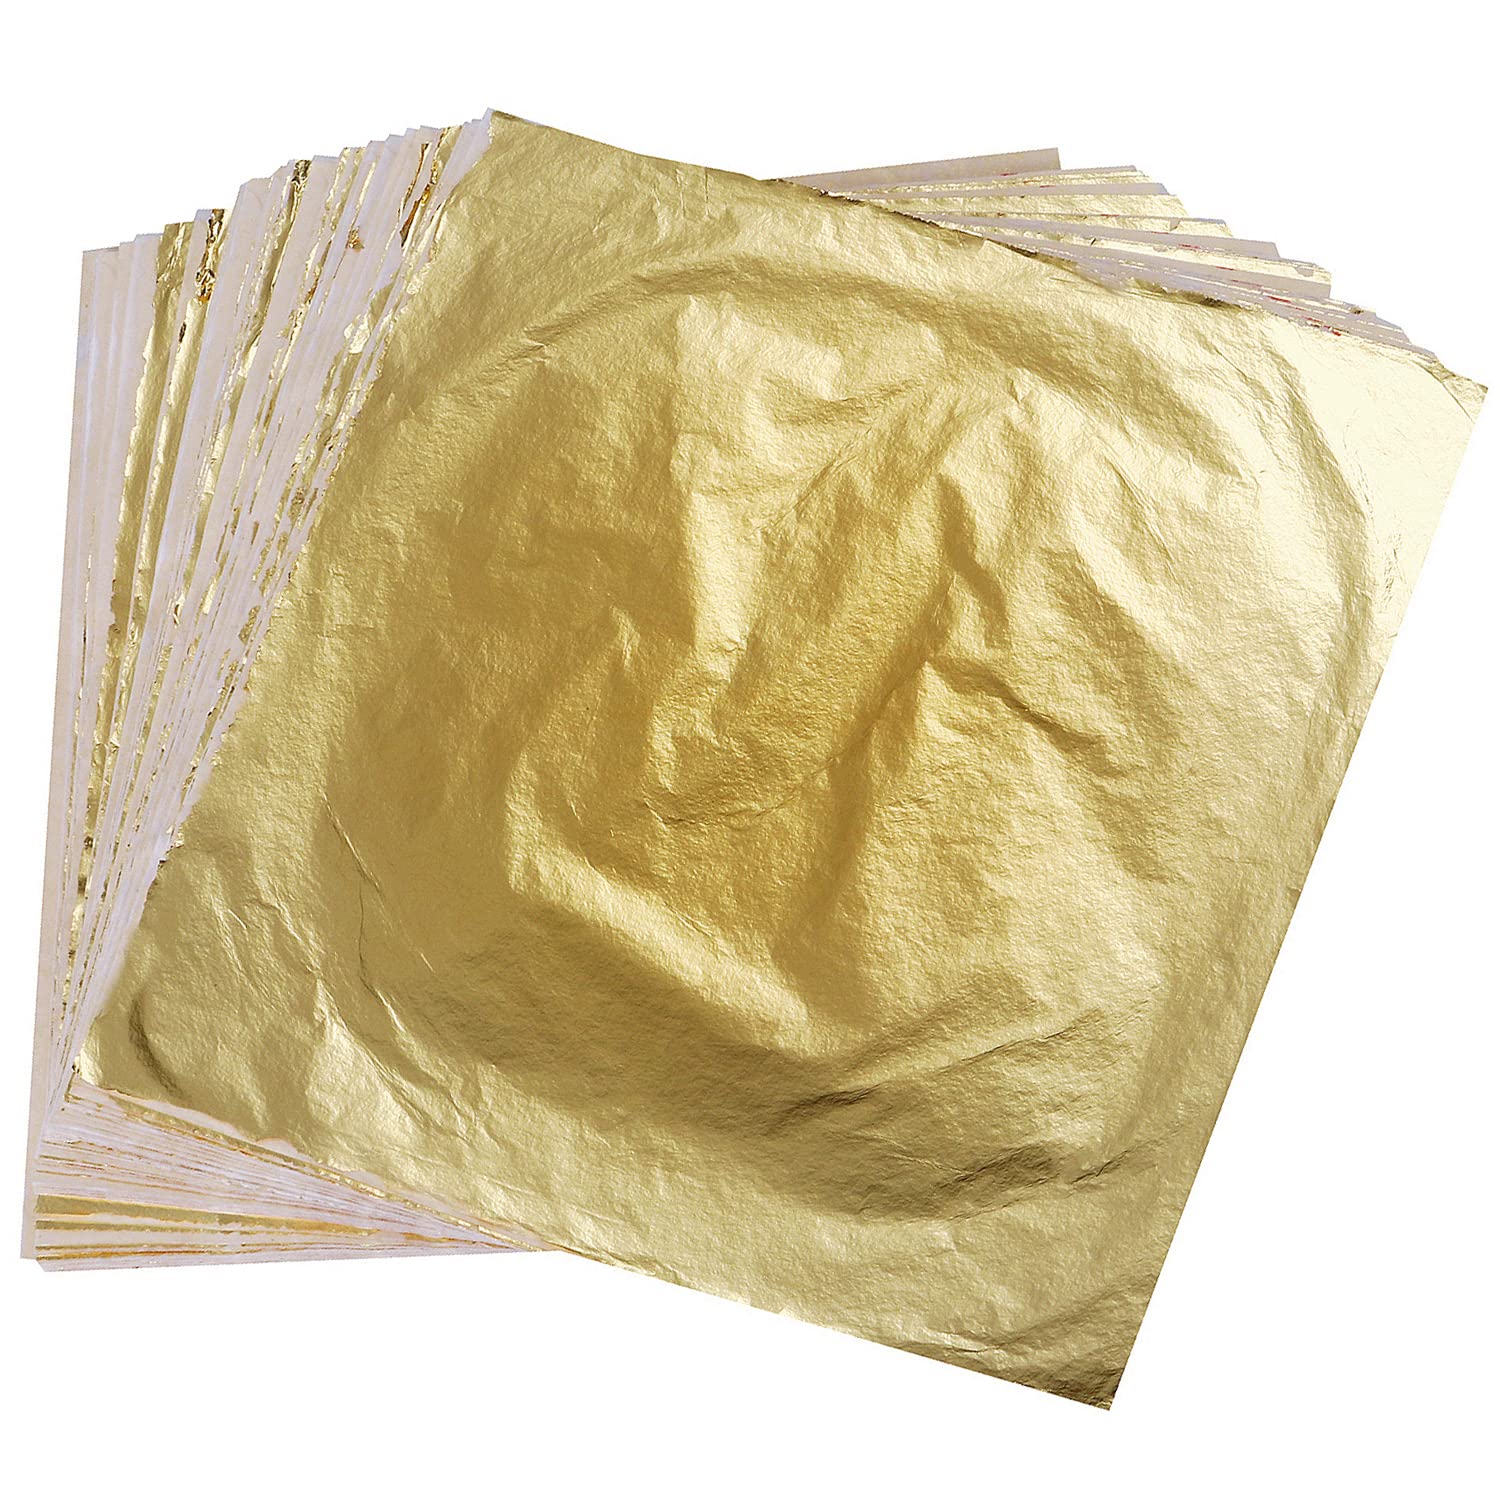 Gigules Gold Leaf Sheets 100 Pcs Imitation Gold Foil Sheets for Arts  Painting Gilding Crafts Decoration 5.5 x 5.5